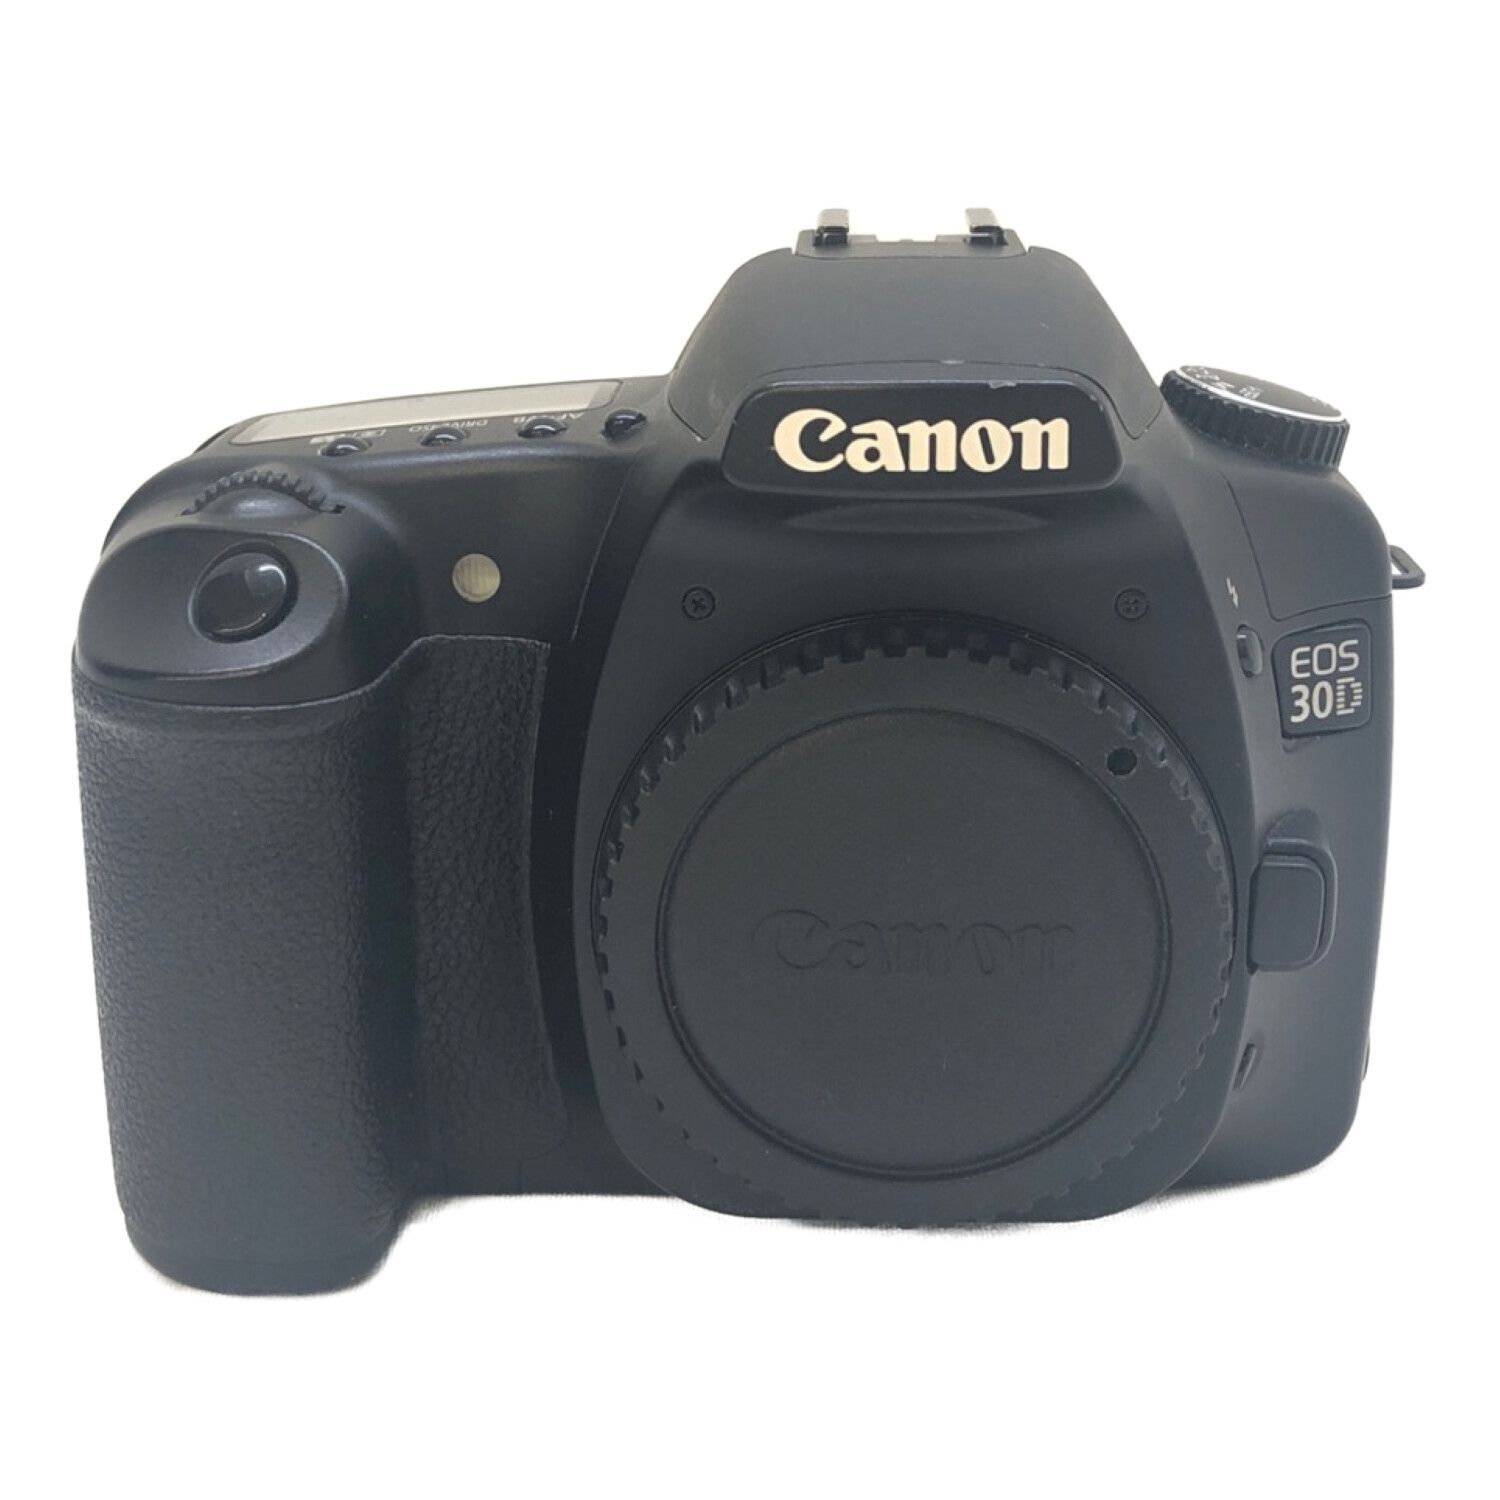 CANON (キャノン) デジタル一眼レフカメラ EOS30D DS126131 850万画素